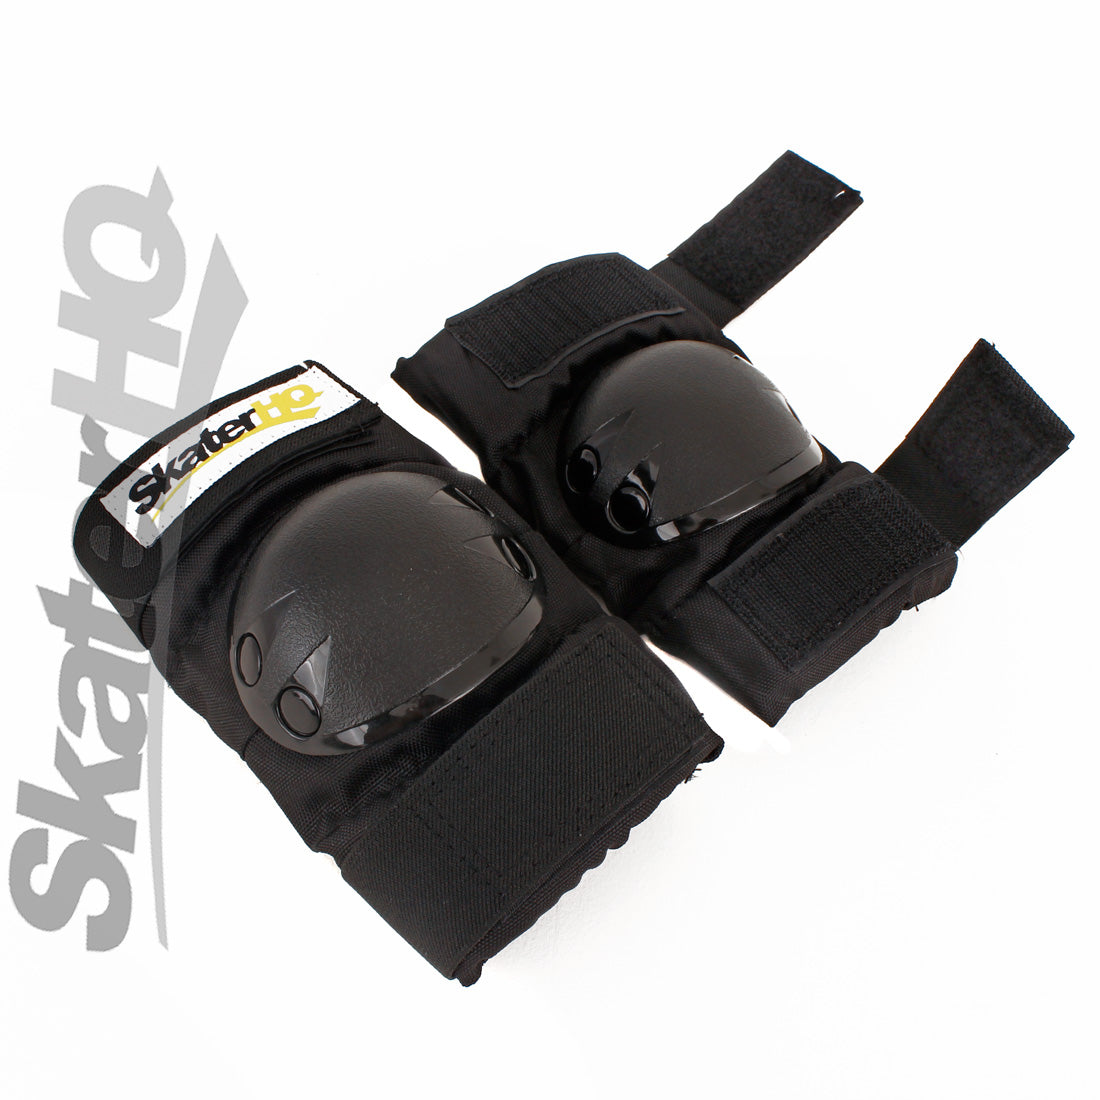 Skater HQ Knee Pads - Grommet Protective Gear